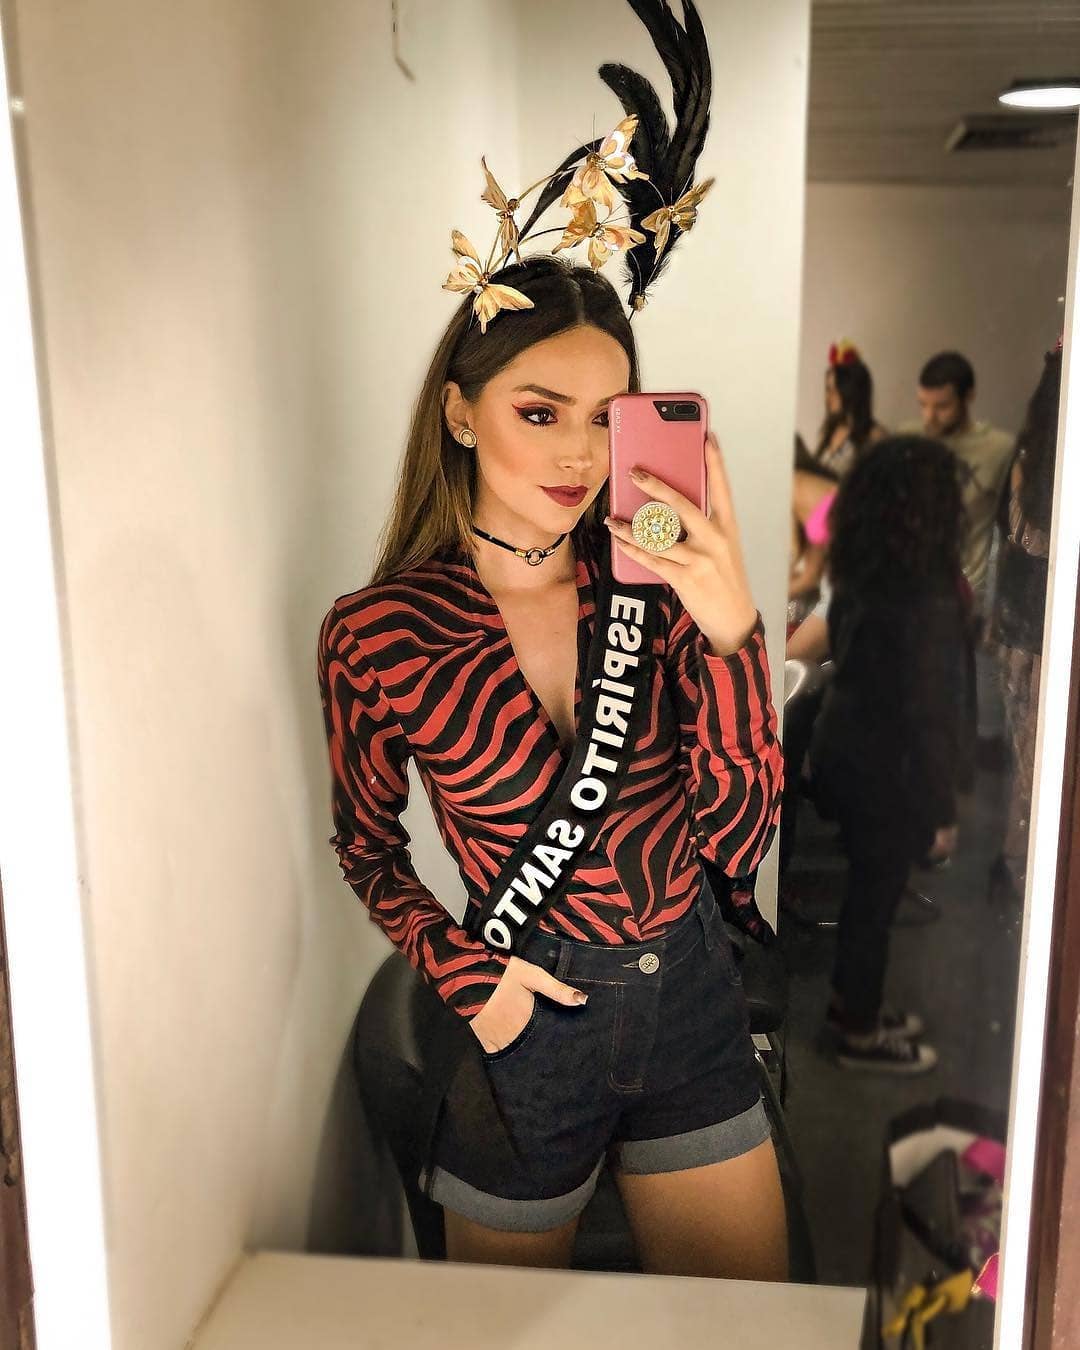 thaina castro, top 10 de miss brasil universo 2019. - Página 4 52135110